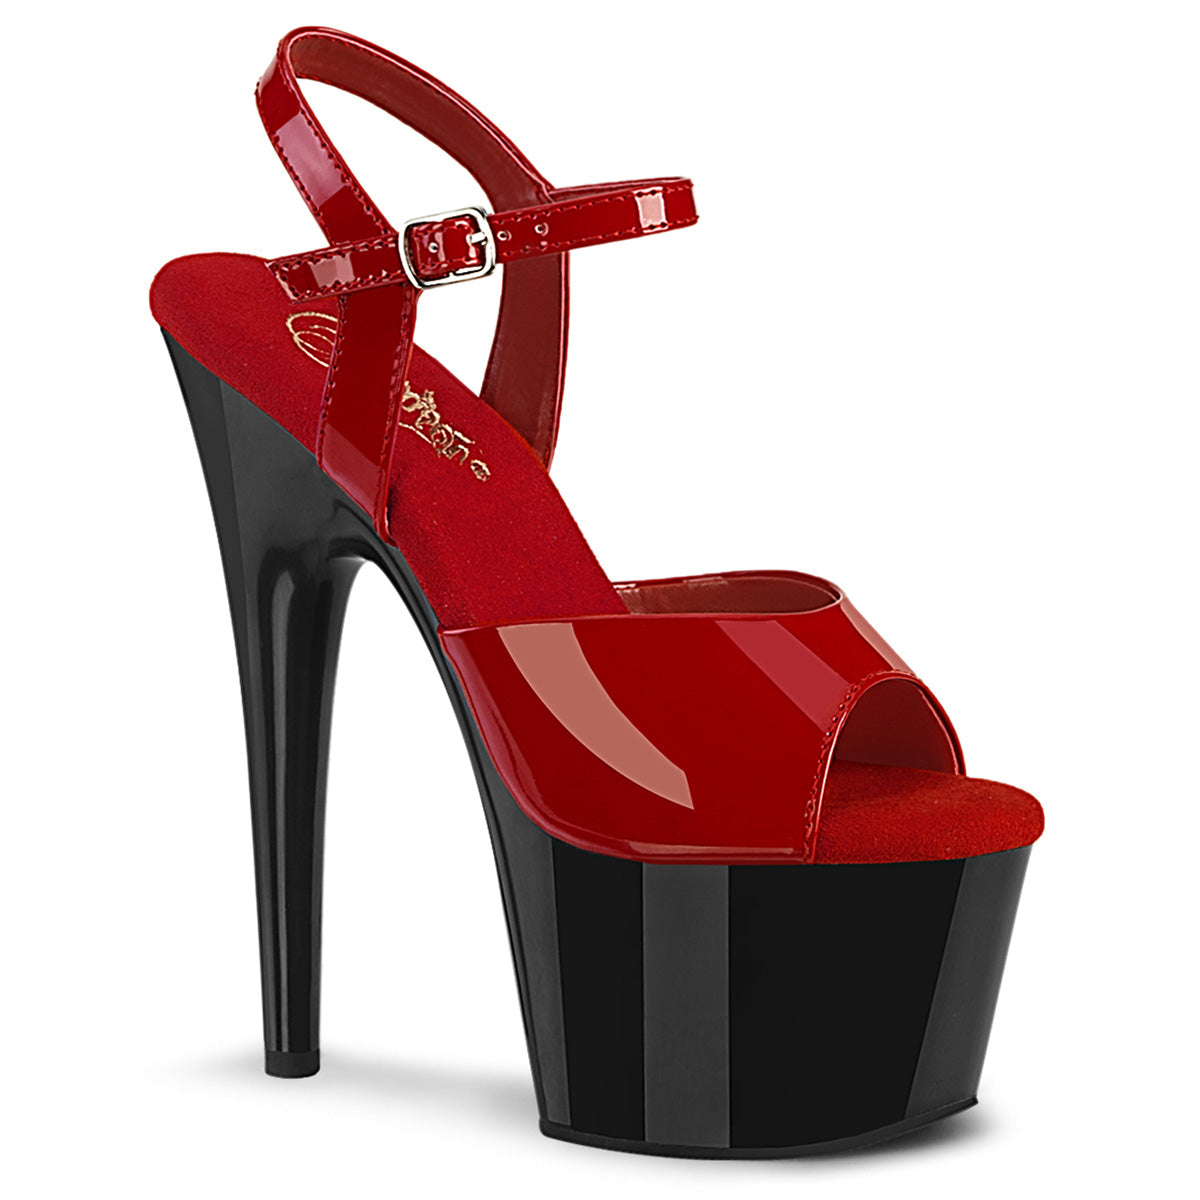 ADORE-709 Black & Red Ankle Peep Toe High Heel